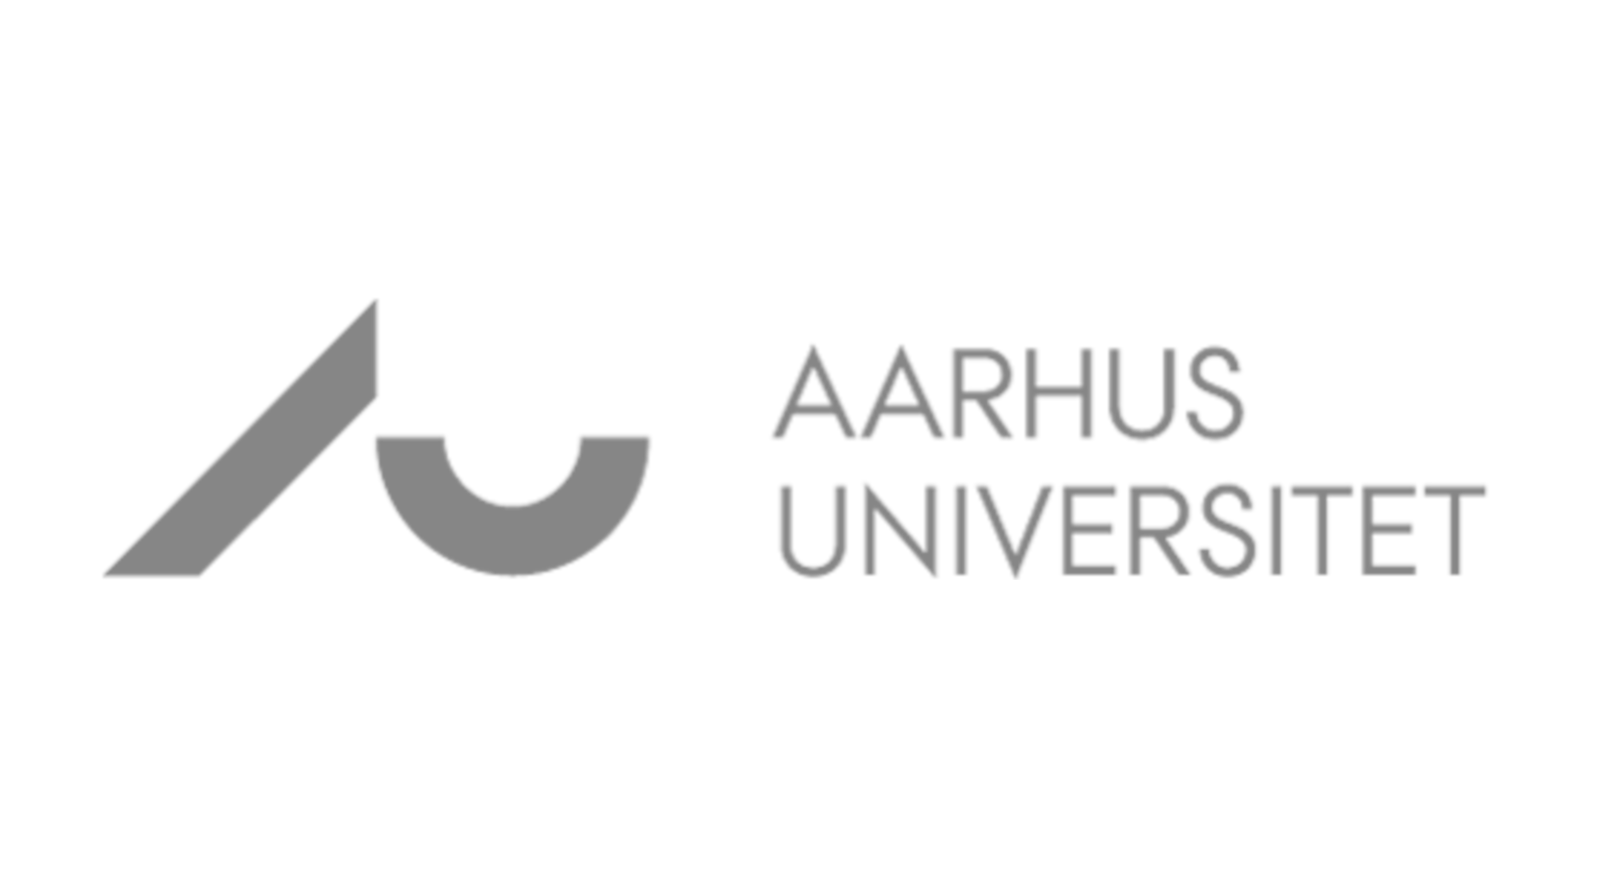 aarhus-universitet-grayscaled